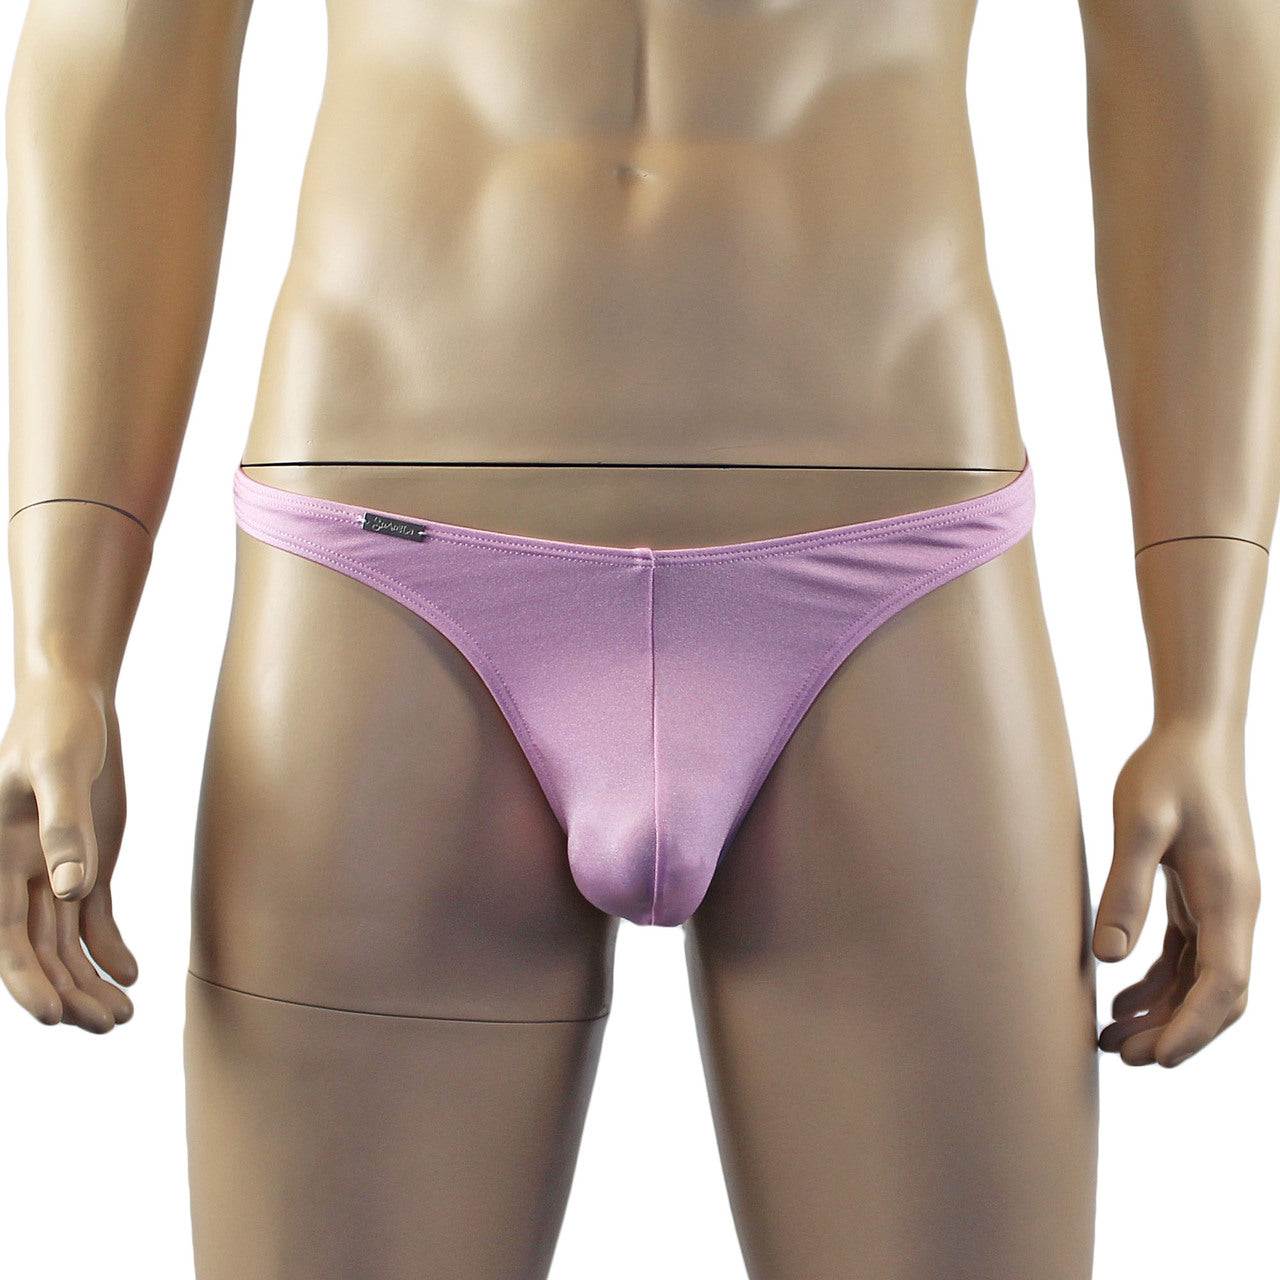 Mens Mick Spandex Medium Rise G string Thong Underwear Lingerie Light Pink